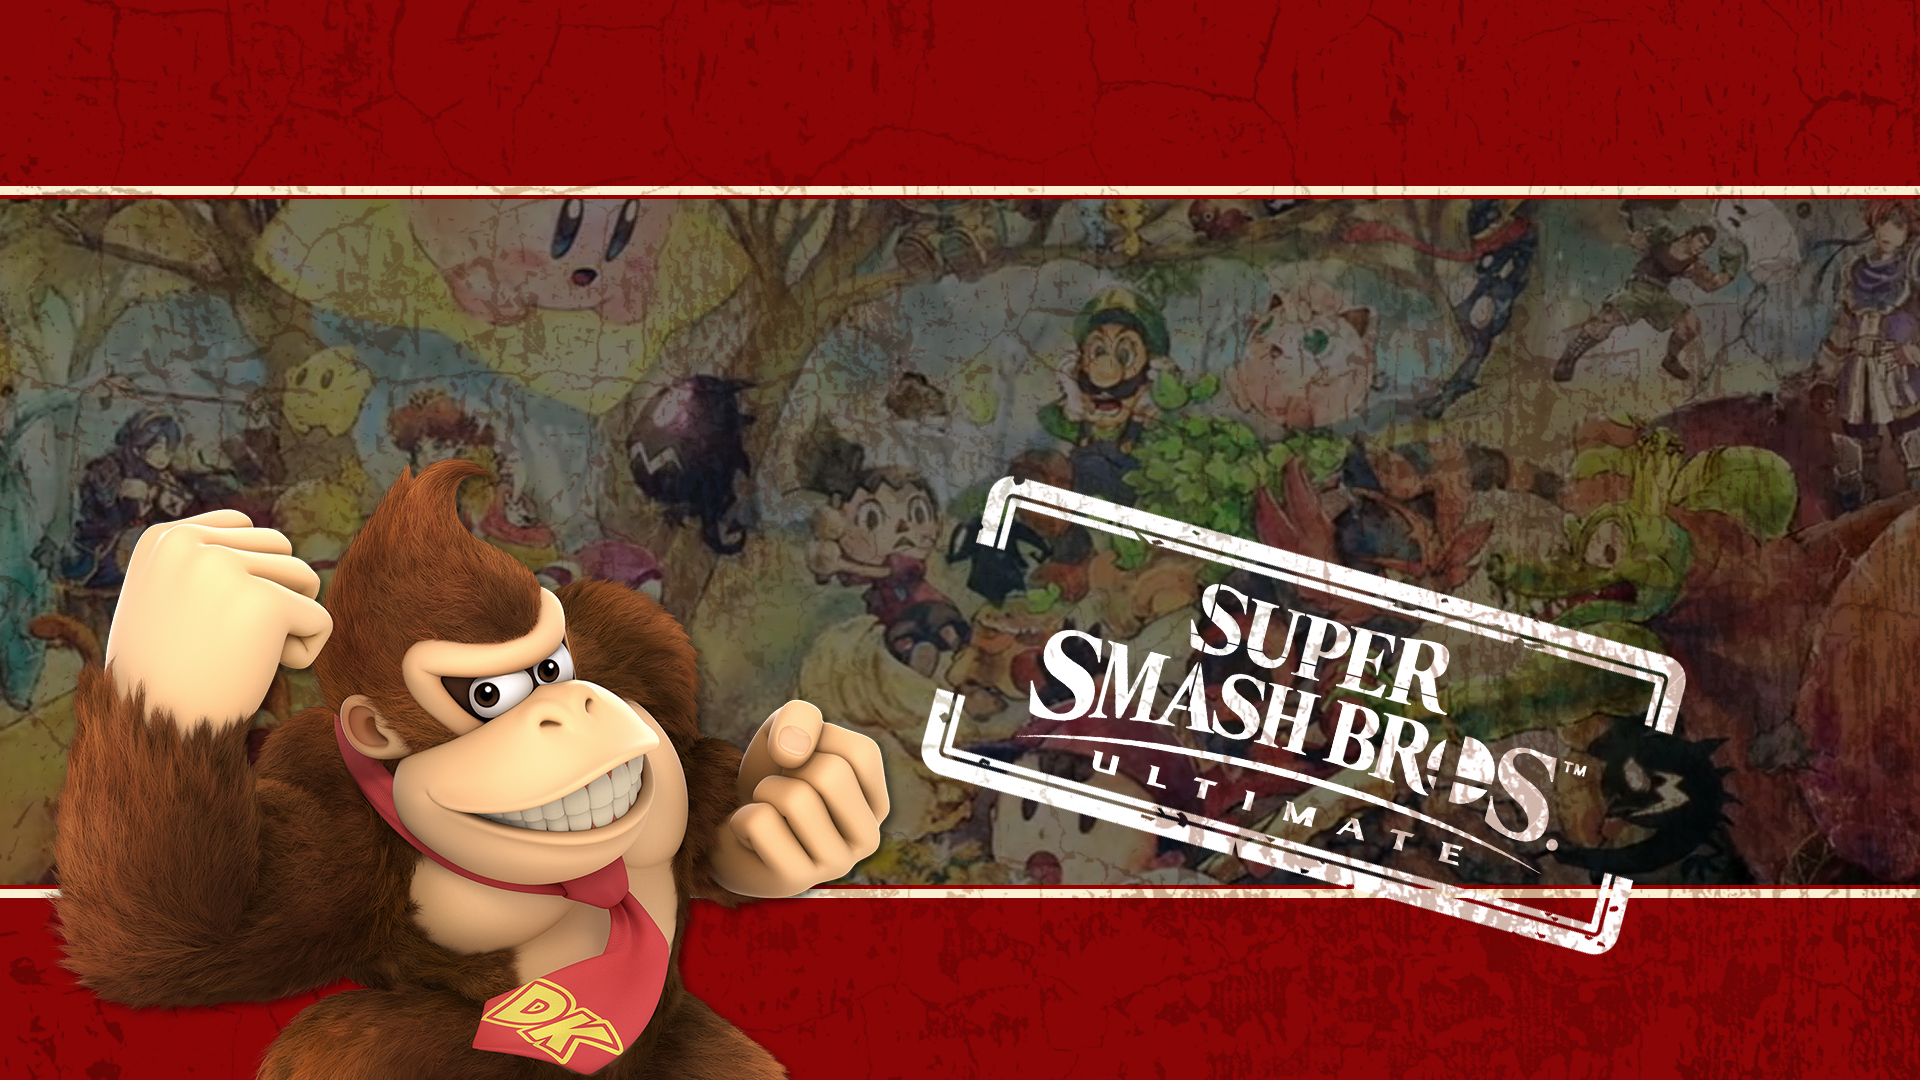 20.00 - Smash Bros. Ultimate